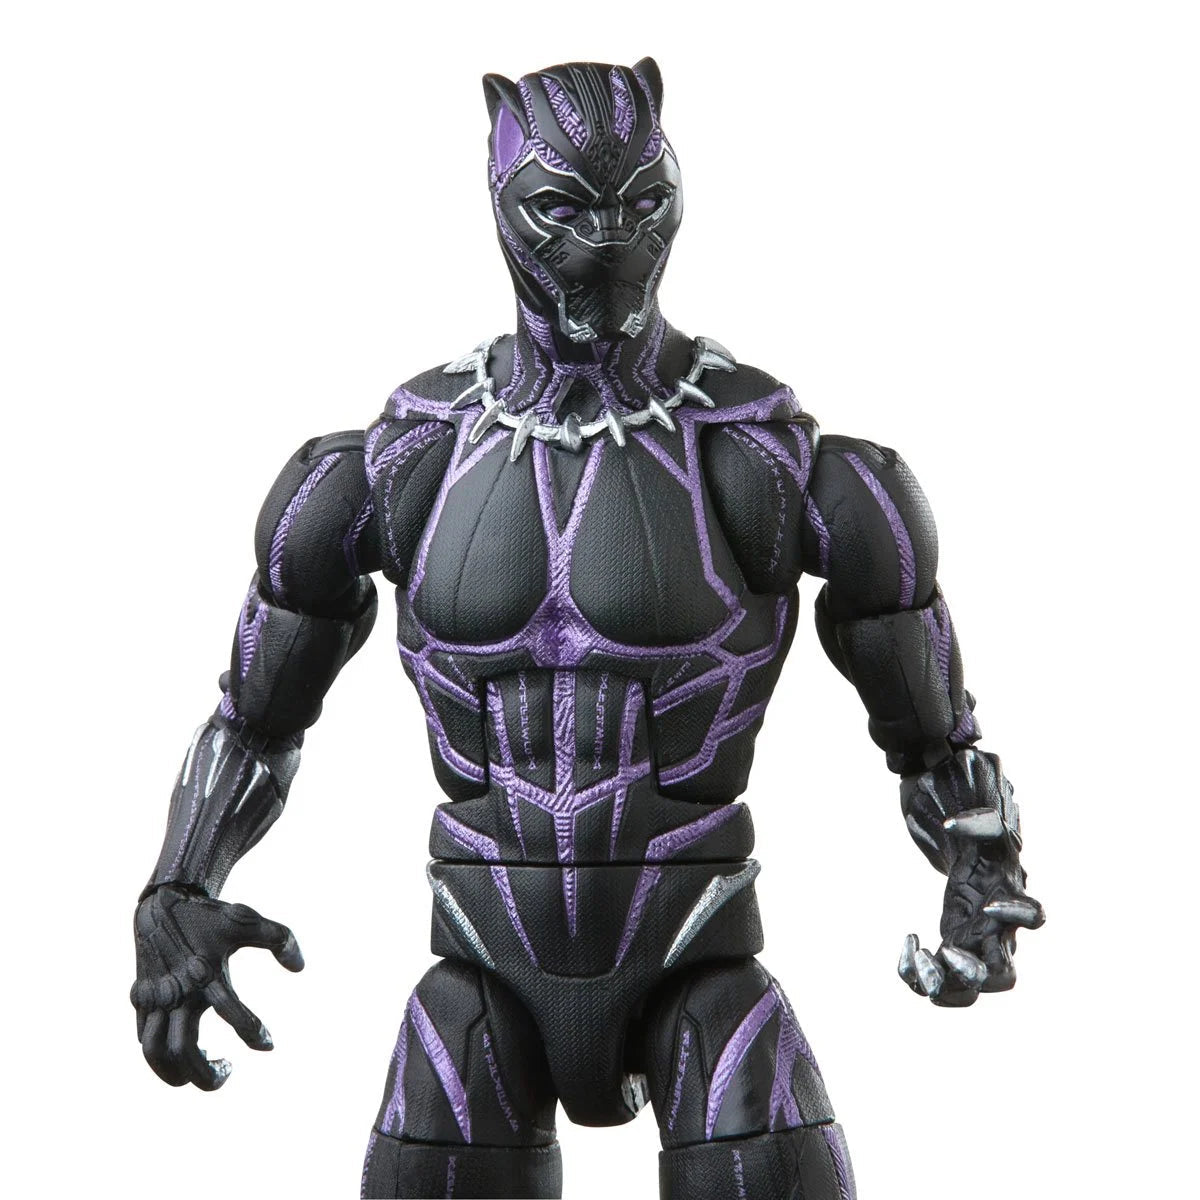 Marvel Legends Black Panther Collection Black Panther Hasbro